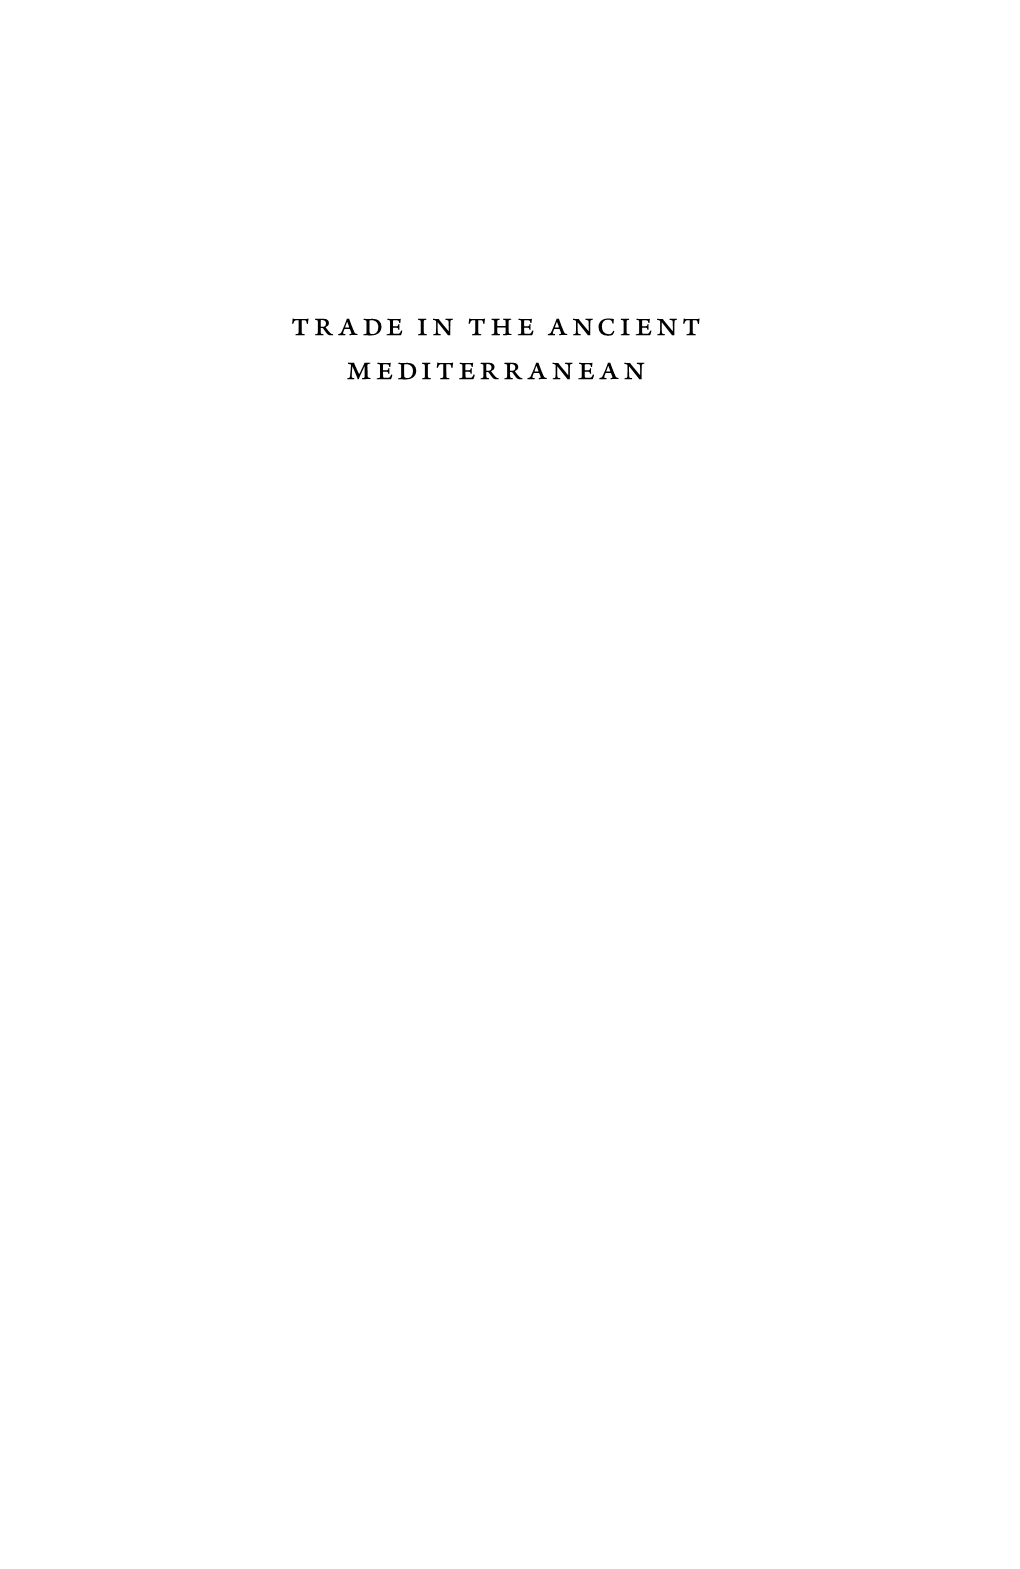 Trade in the Ancient Mediterranean the Princeton Economic History of the Western World Joel Mokyr, Series Editor